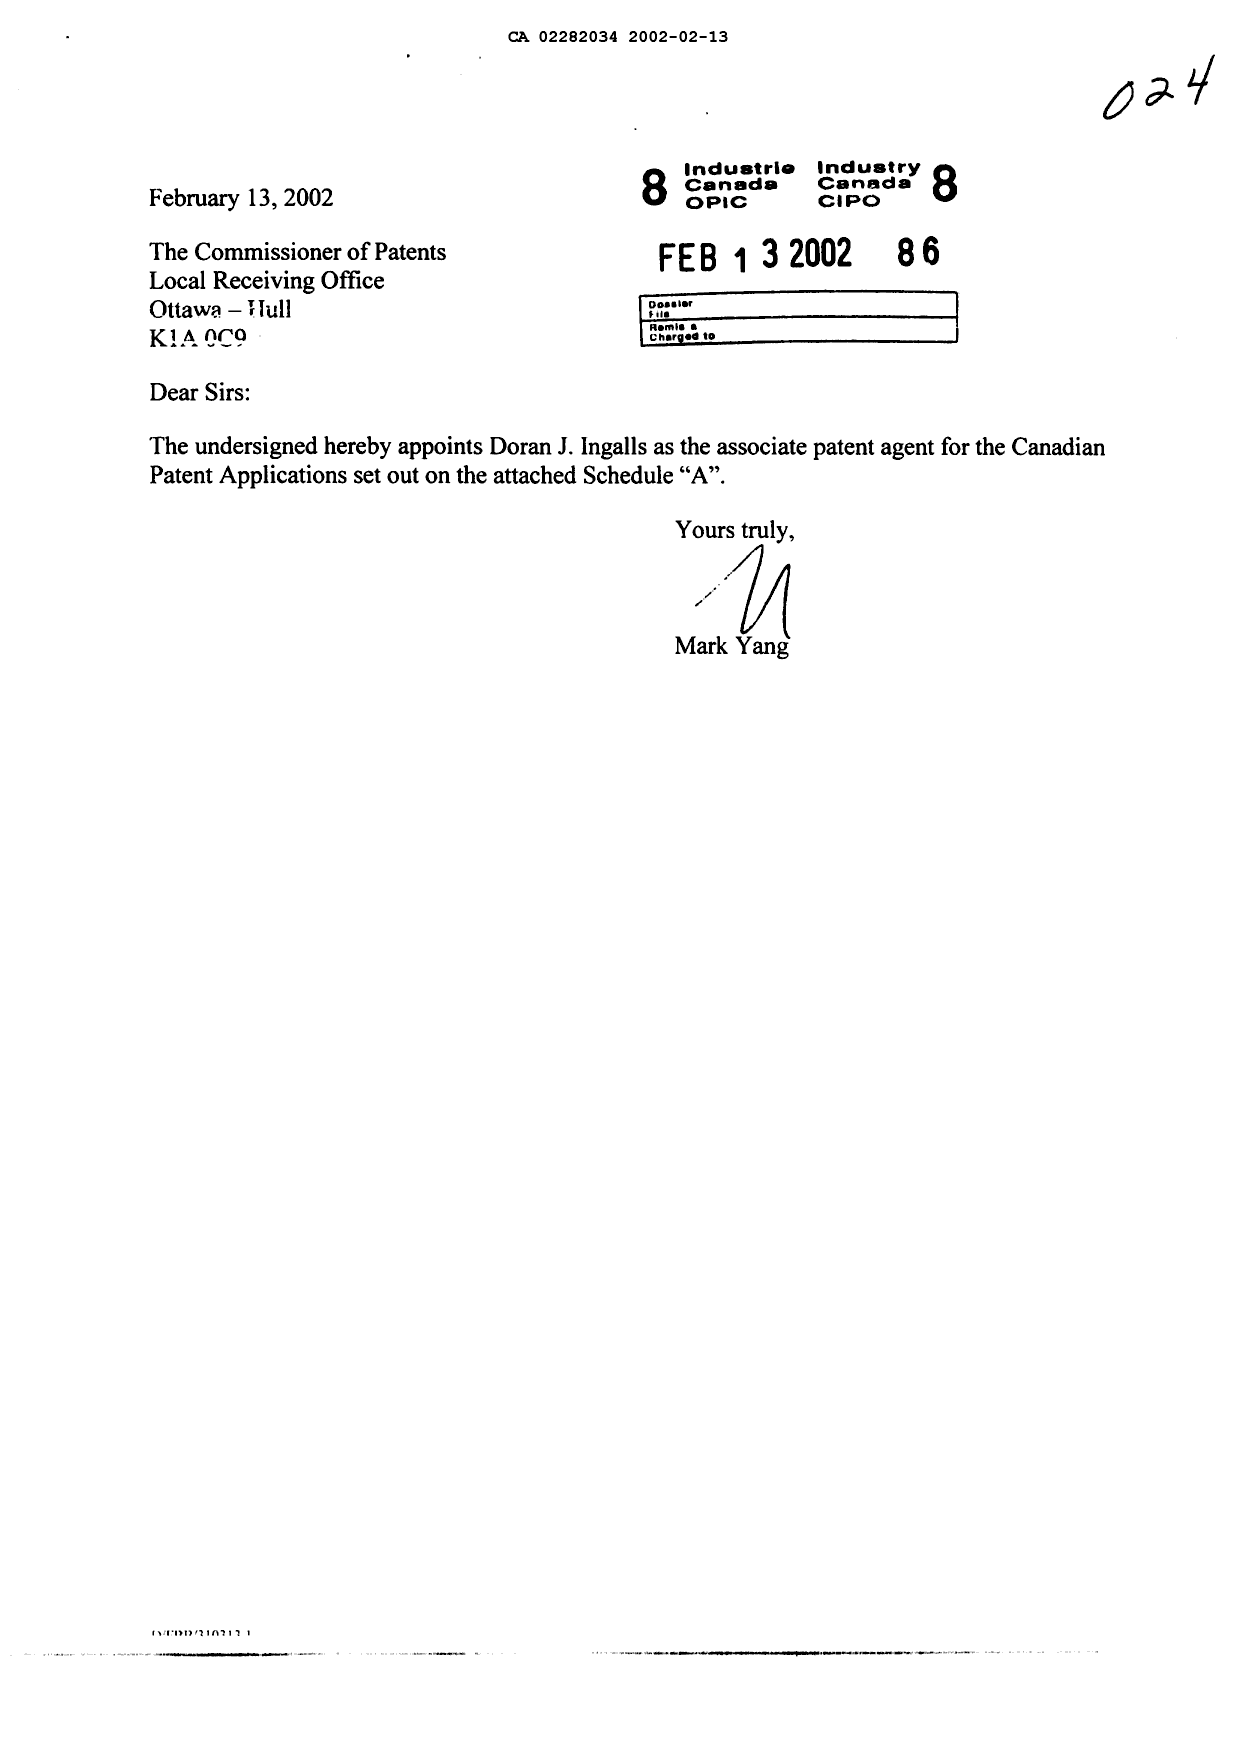 Canadian Patent Document 2189378. Correspondence 20011213. Image 1 of 6